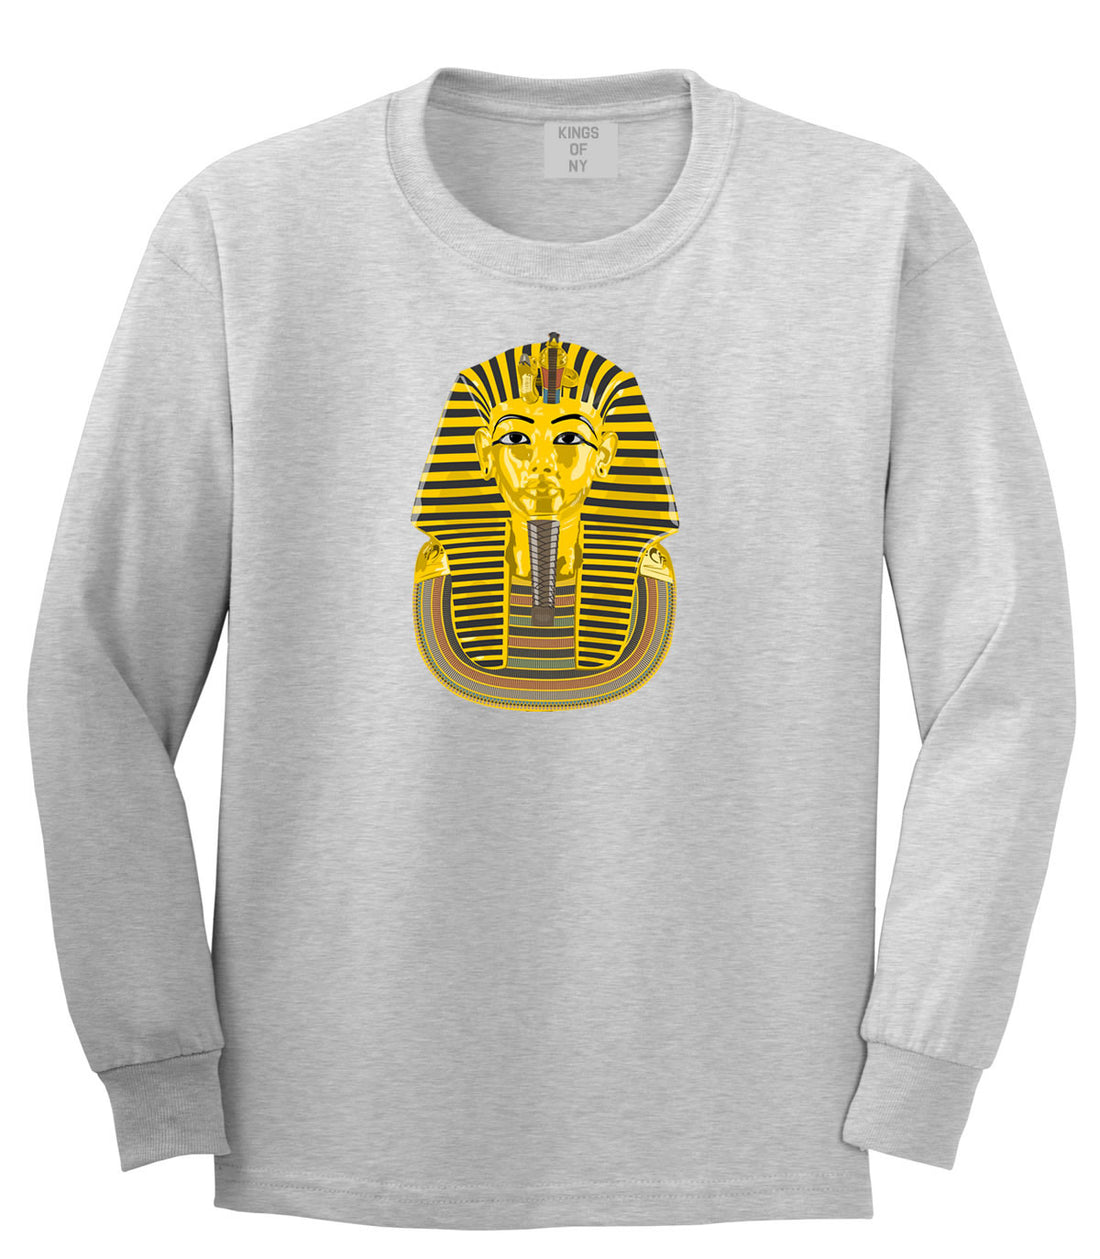 Pharaoh Egypt Gold Egyptian Head  Long Sleeve Boys Kids T-Shirt In Grey by Kings Of NY